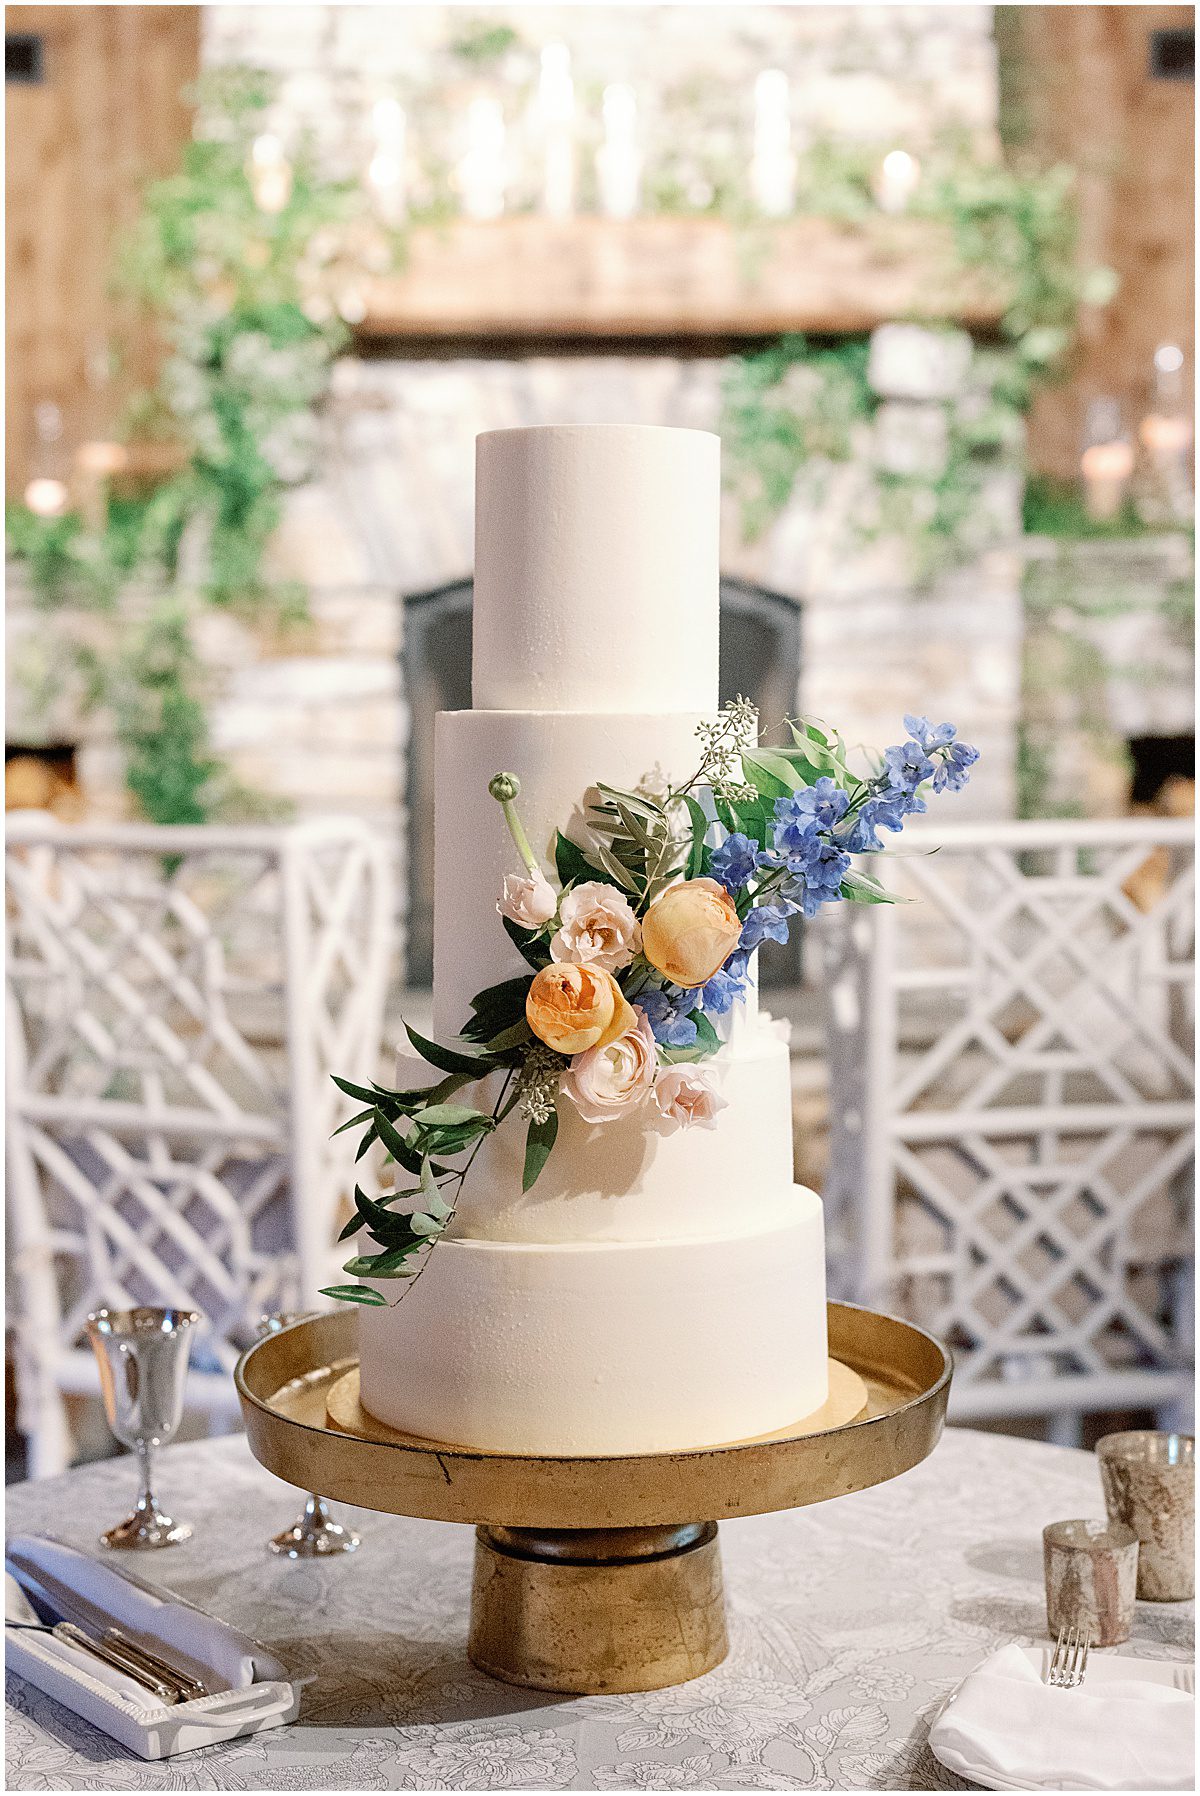 Wedding Cake with Flowers Photo